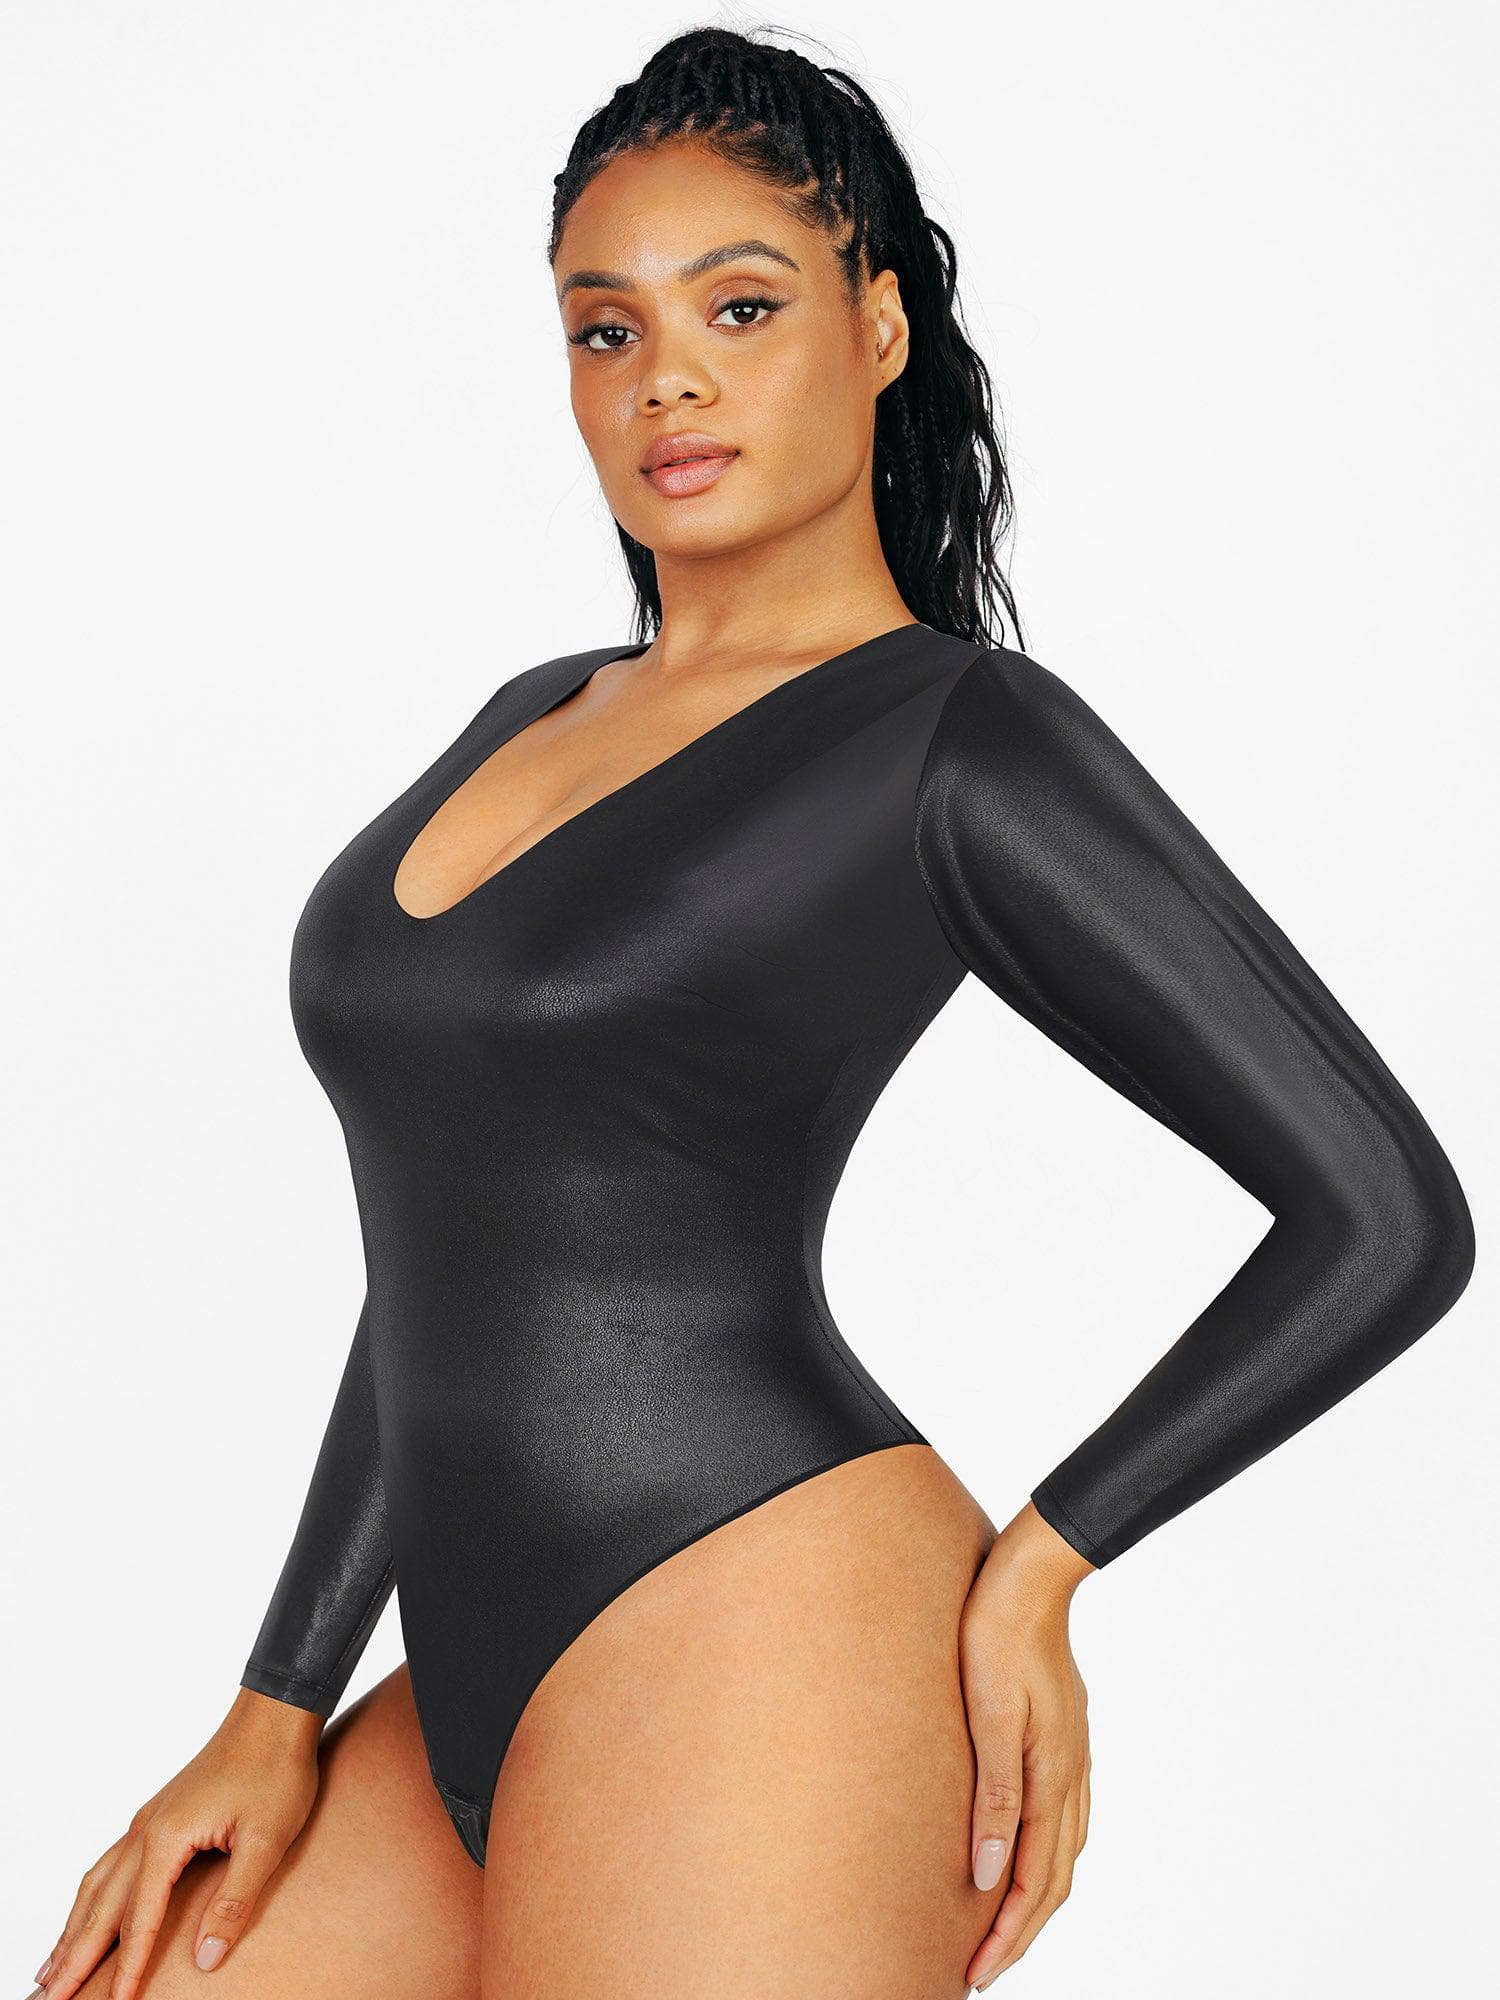 Bodysuit for Woman, Black Mesh Back Long Sleeves Bodysuit, Black Top -   Canada